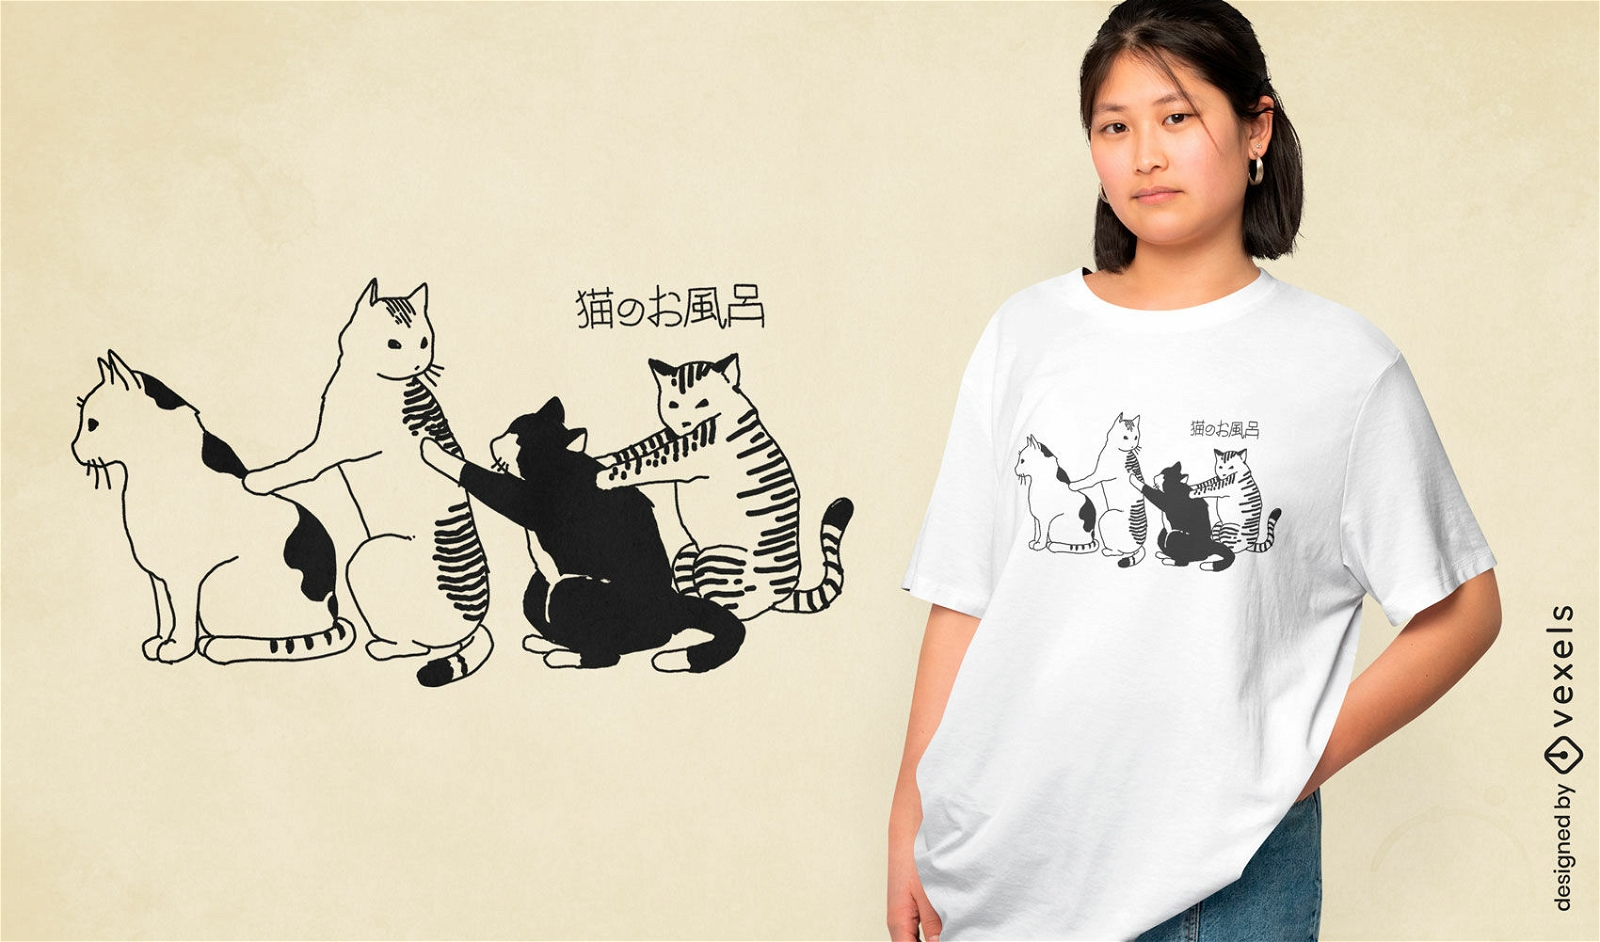 Dise?o de camiseta minimalista con arte lineal de gato japon?s.